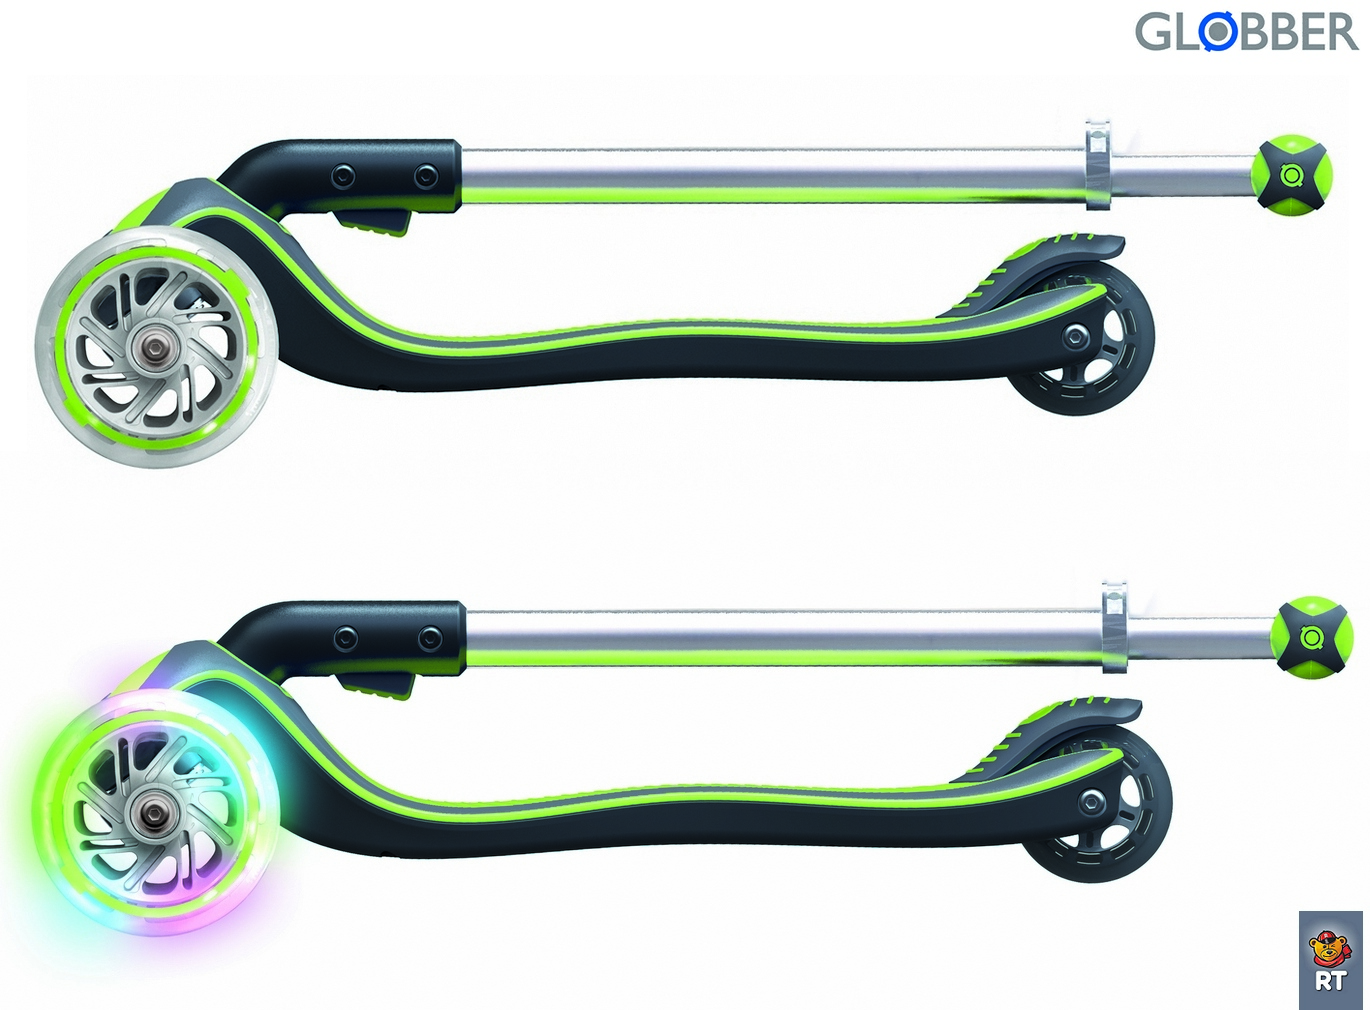 Самокат Globber Elite SL My Free Fold up 445-106 со светящимися колесами, зеленый  